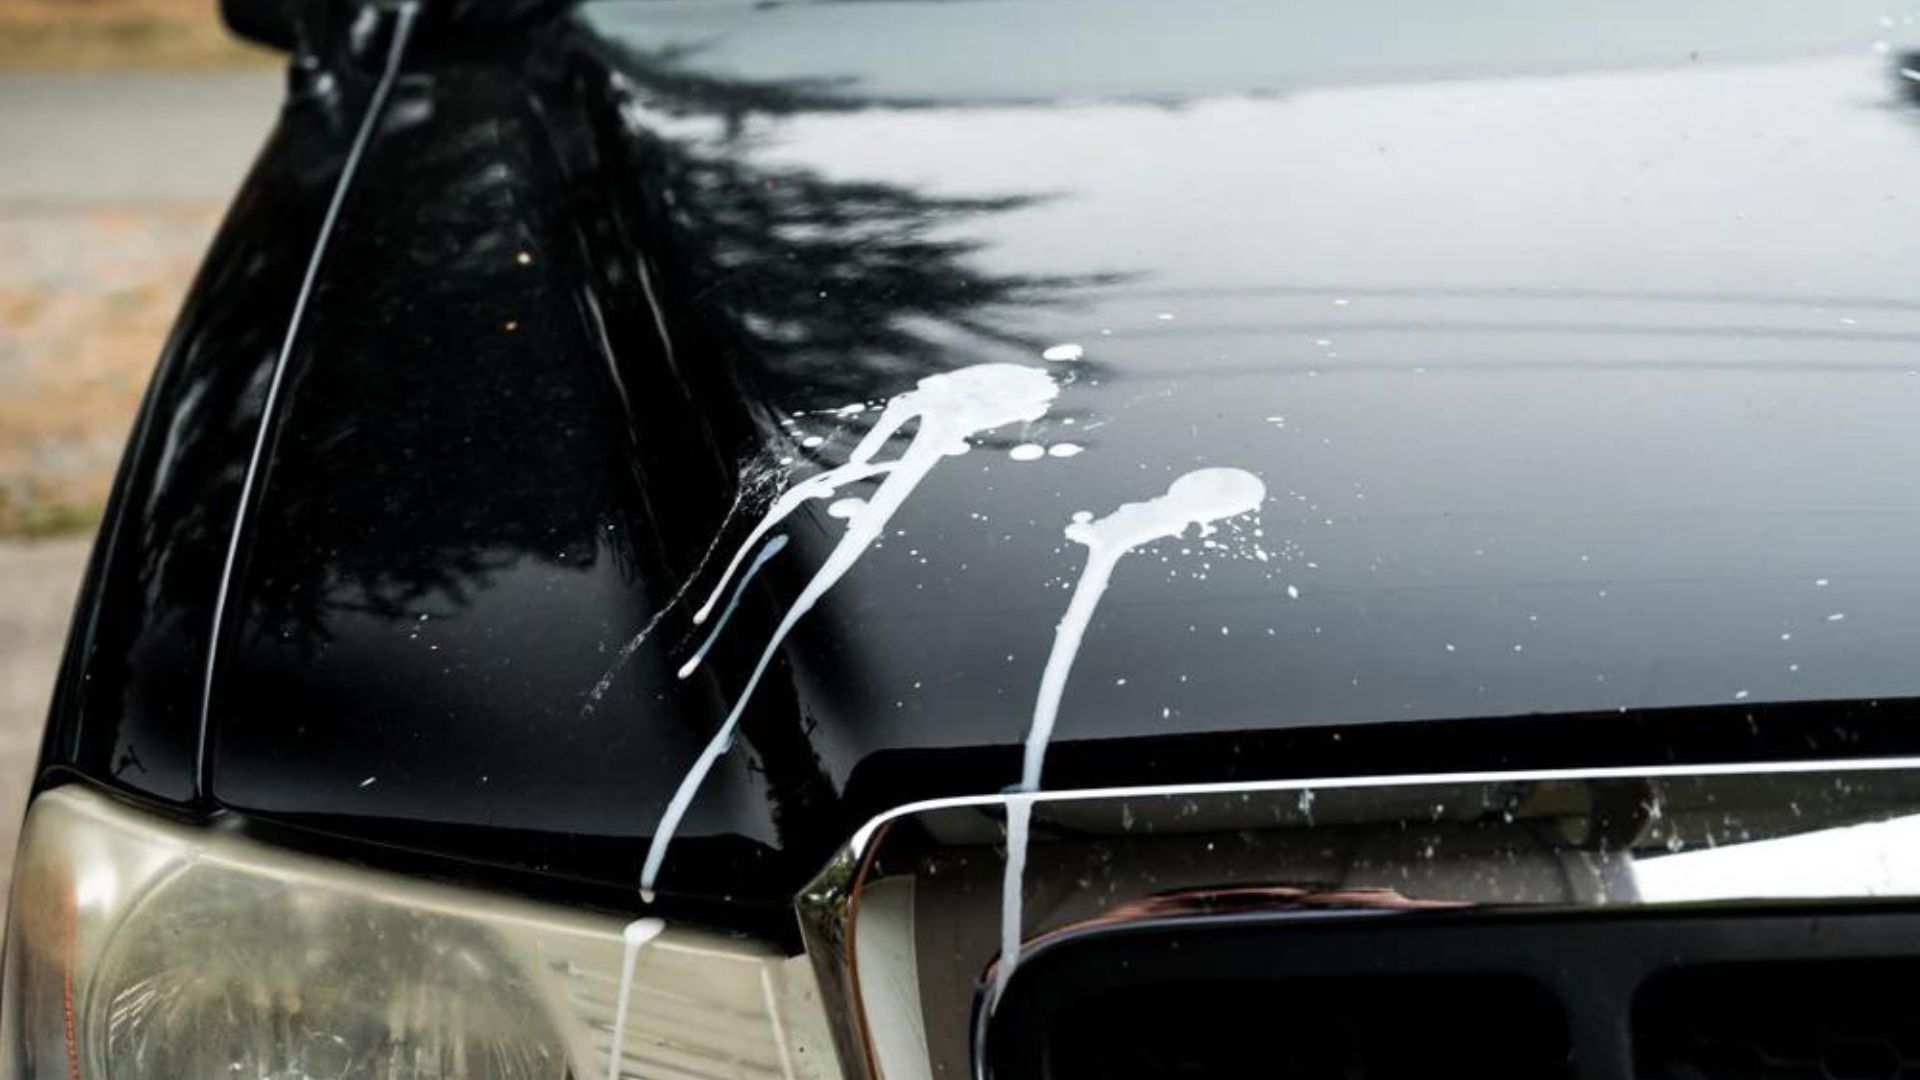 Bird Poop On Front Of Black Car